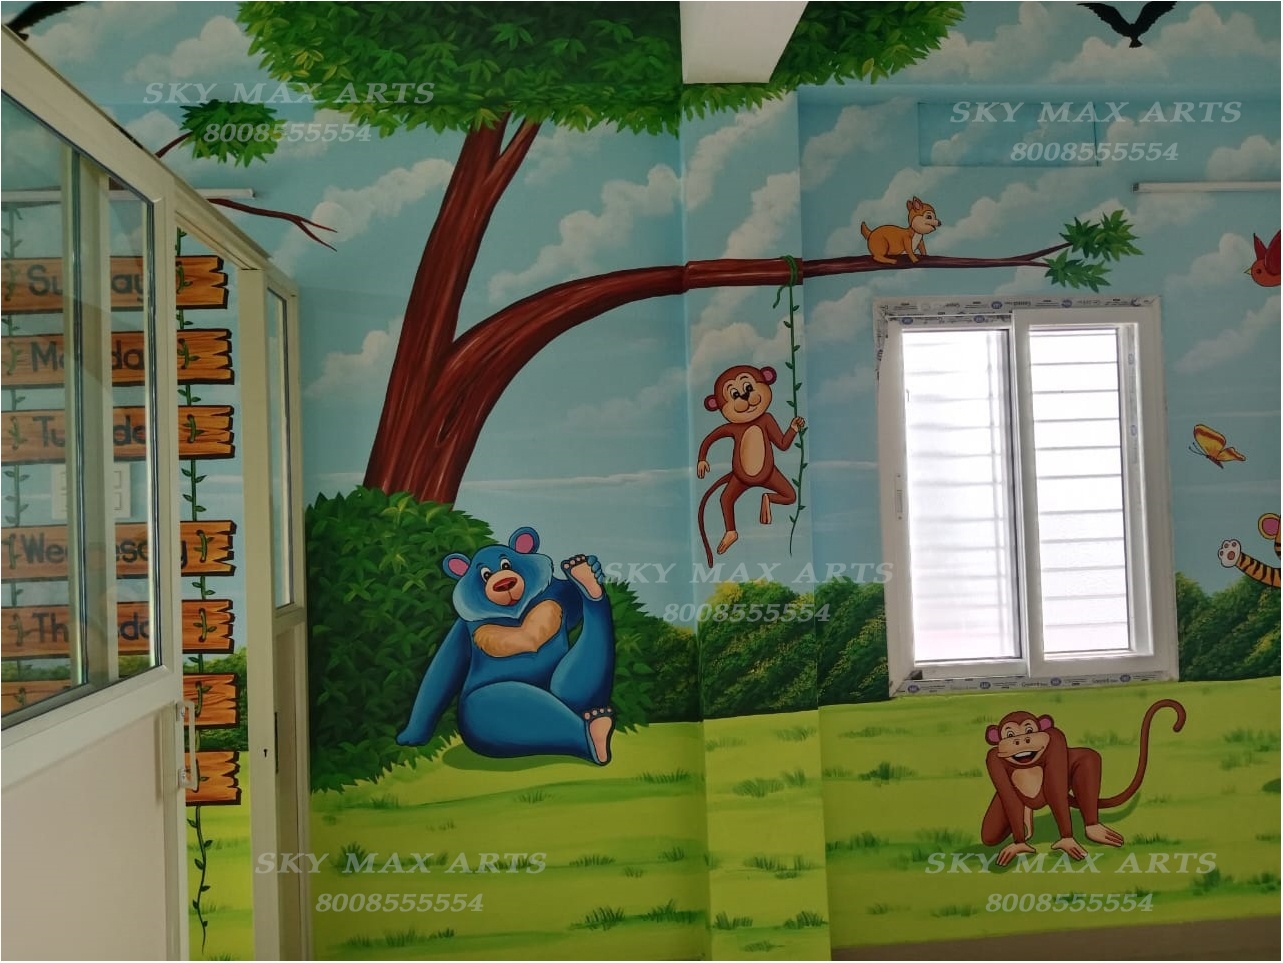 Play School Cartoon Wall Art images From Guntur